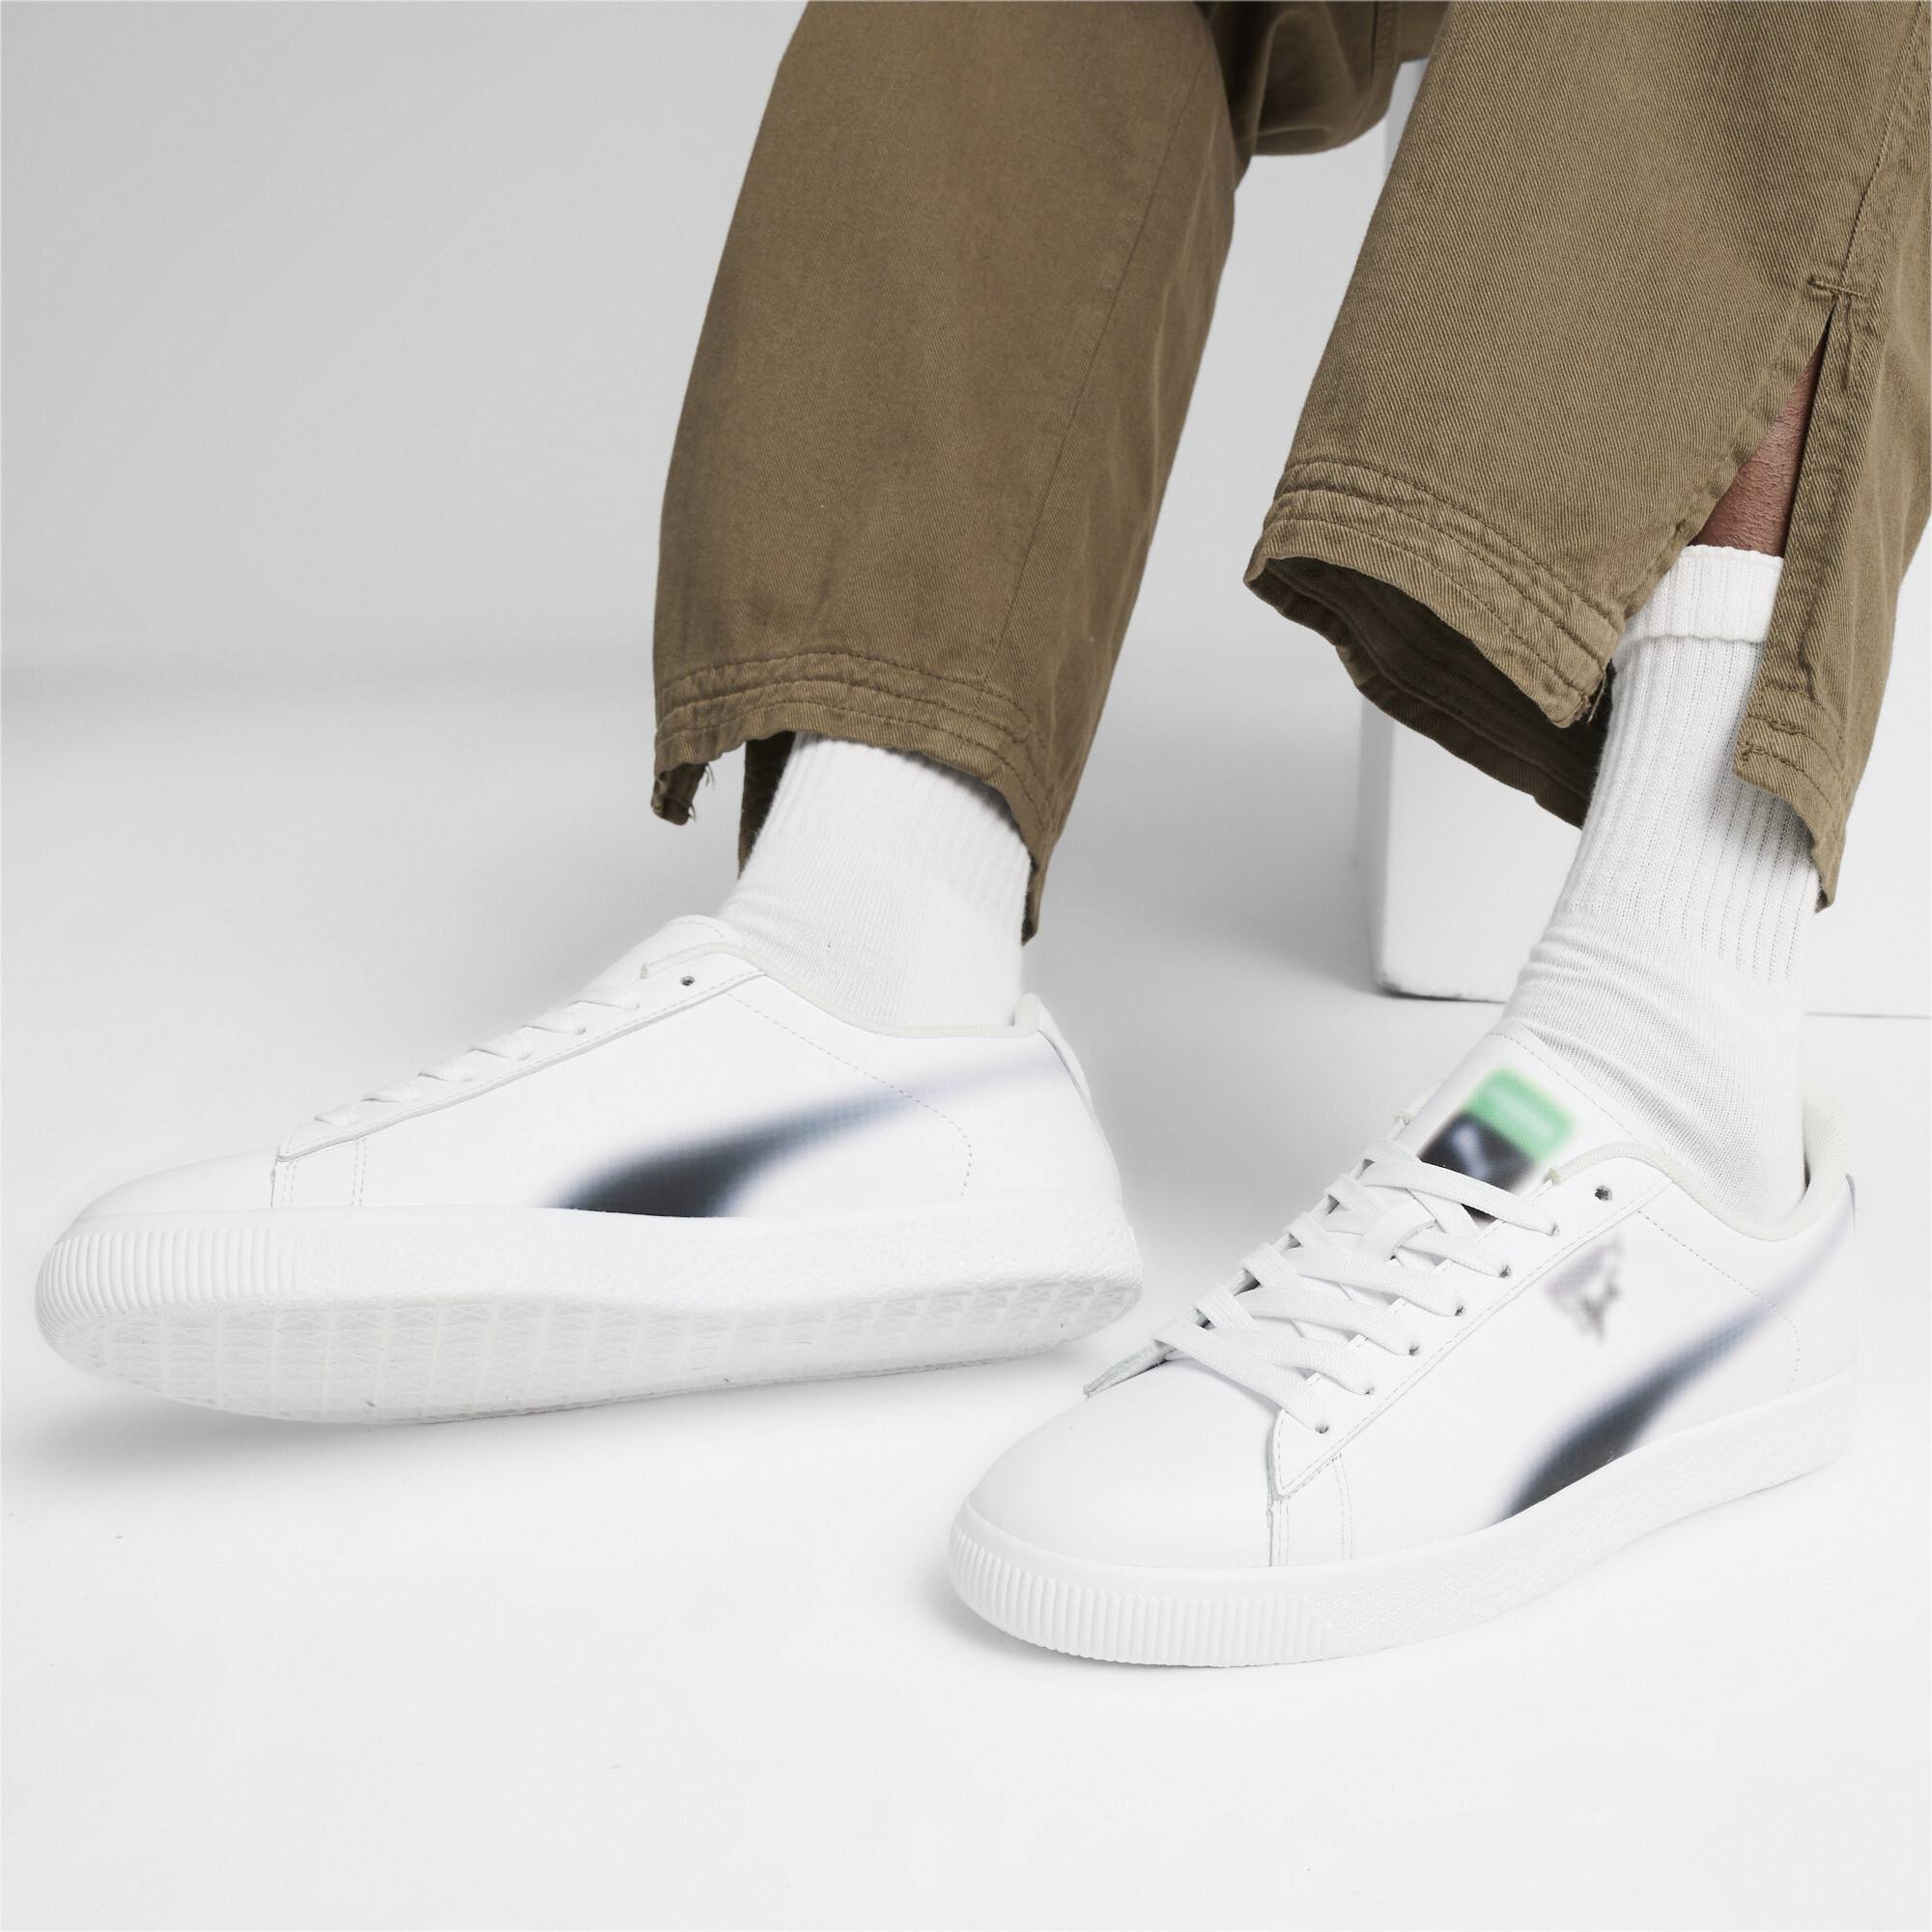 Puma Clyde SKRT SKRT Sneakers, White, Size 38, Shoes